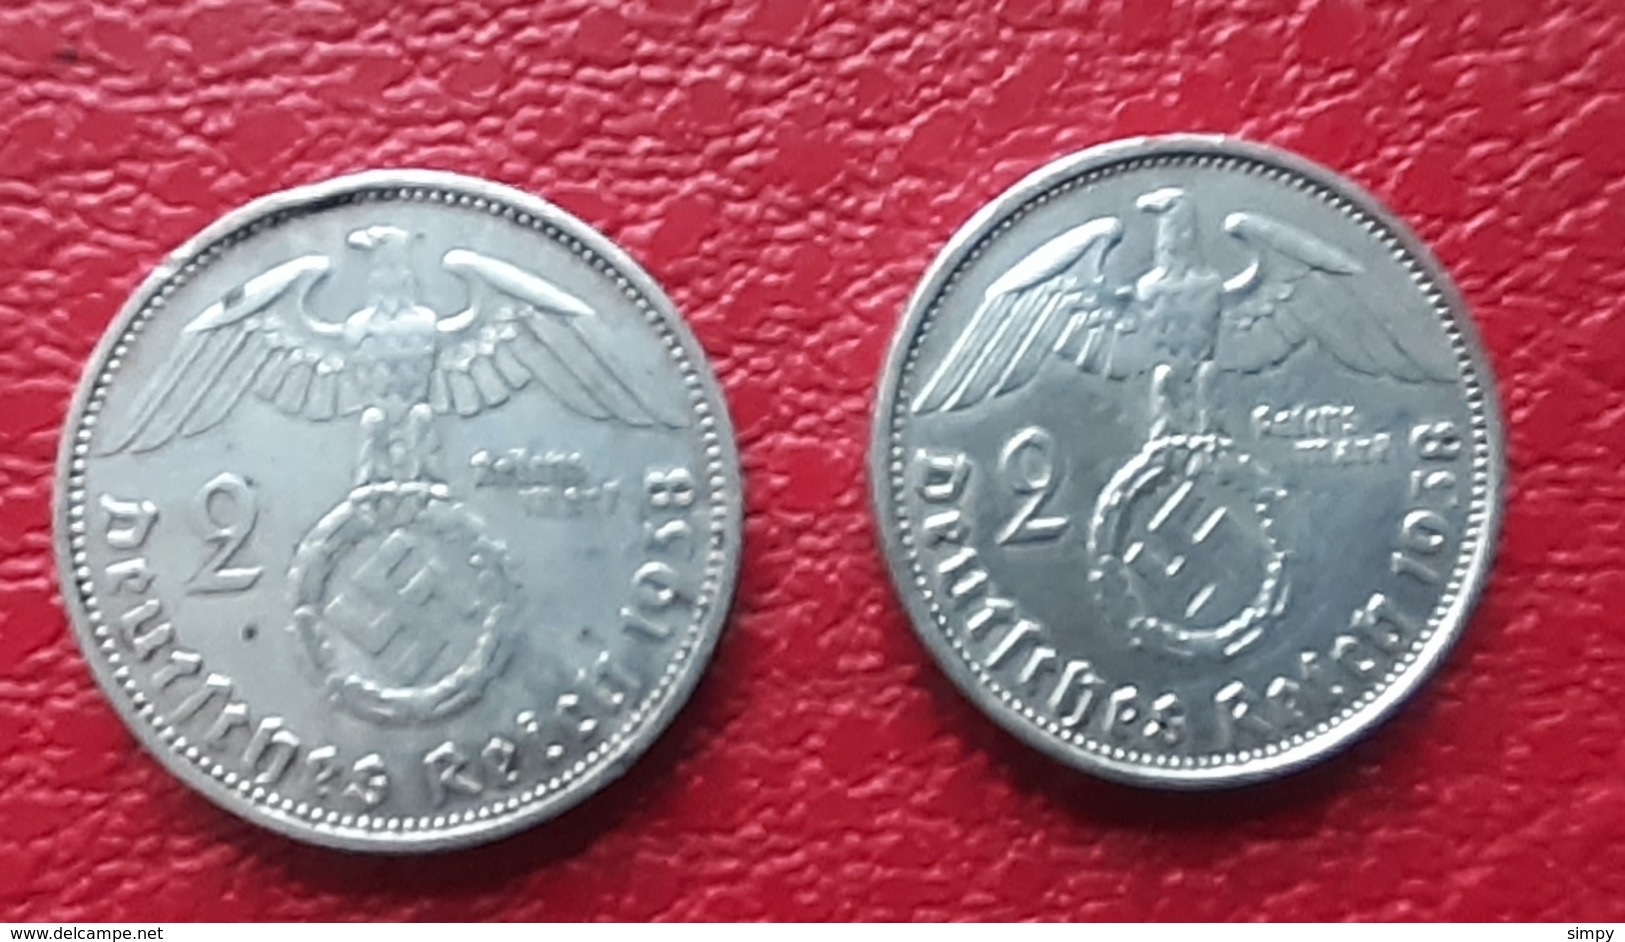 GERMANY 2 ReichMark 1938 A , 1938 B Silver Coins - 2 Reichsmark